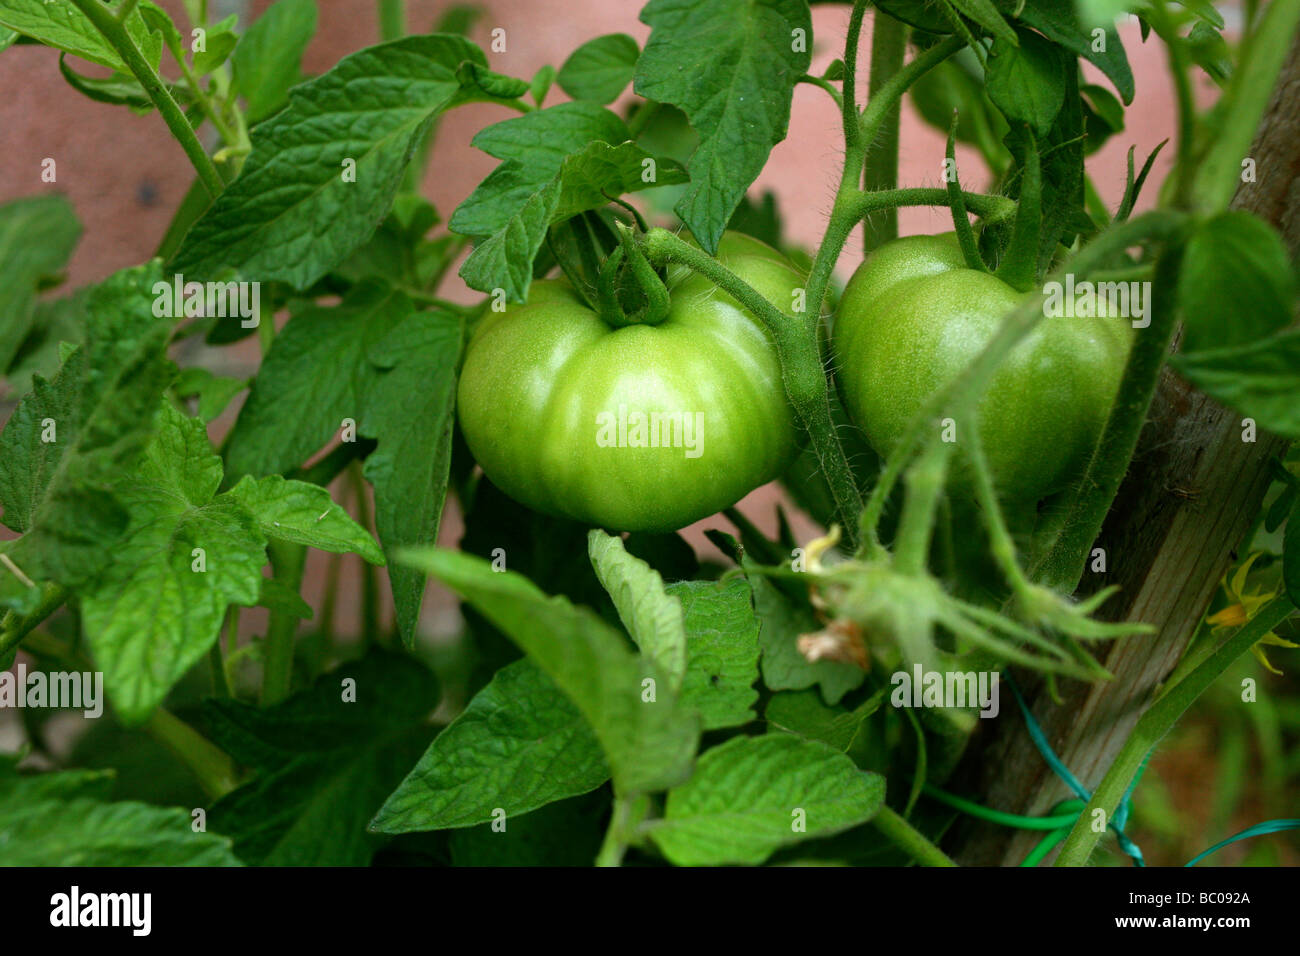 Some delicious, early season tomatoes on the vine, preparing to ripen. Stock Photo